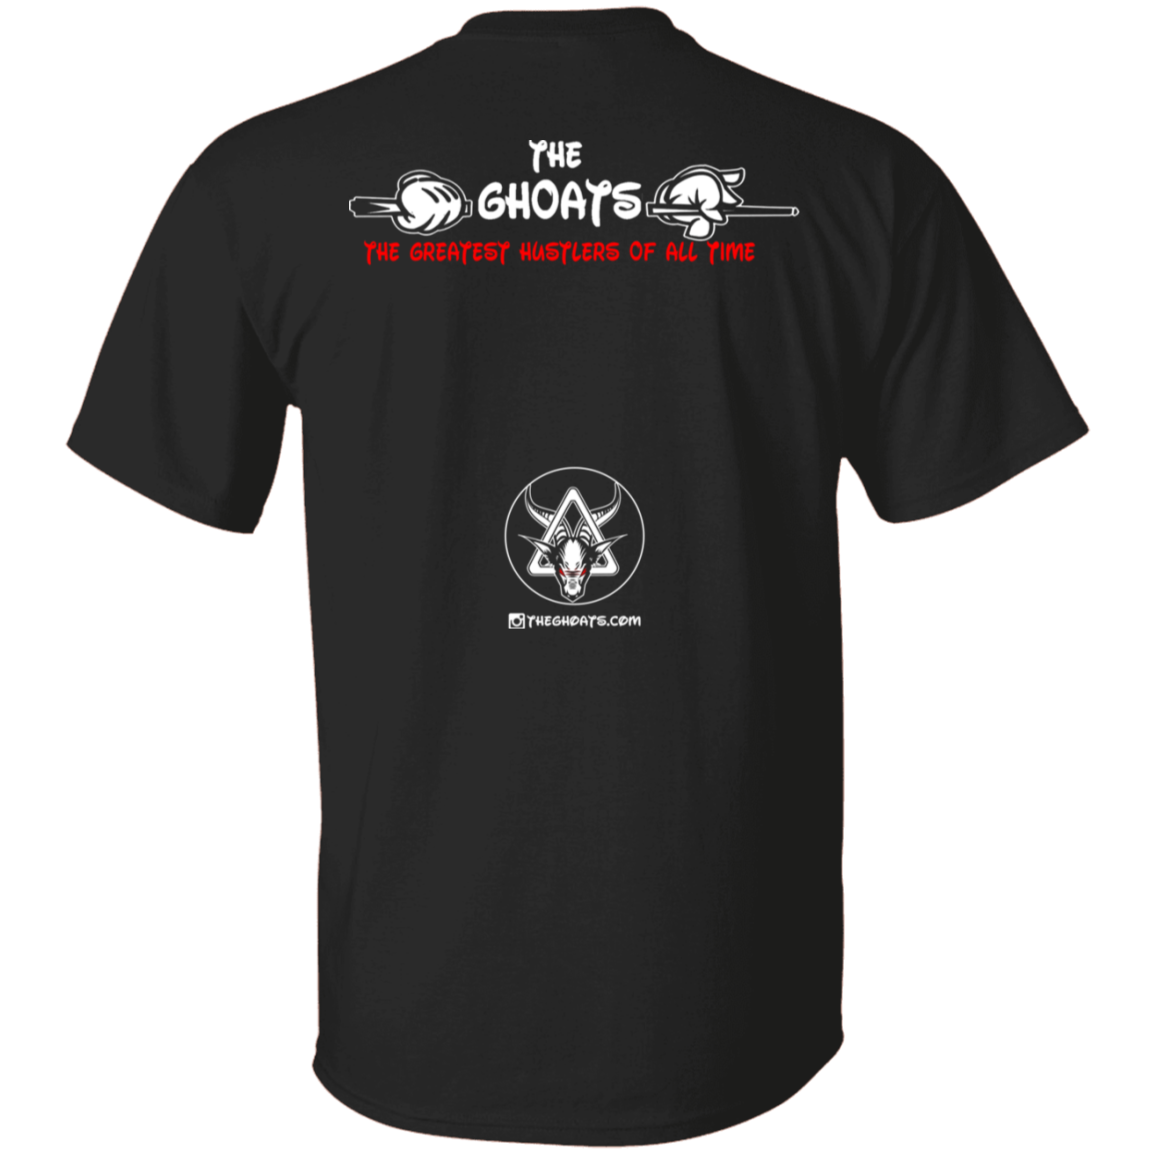 The GHOATS Custom Design. #5 The Best Offense is a Good Defense. Basic Cotton T-Shirt